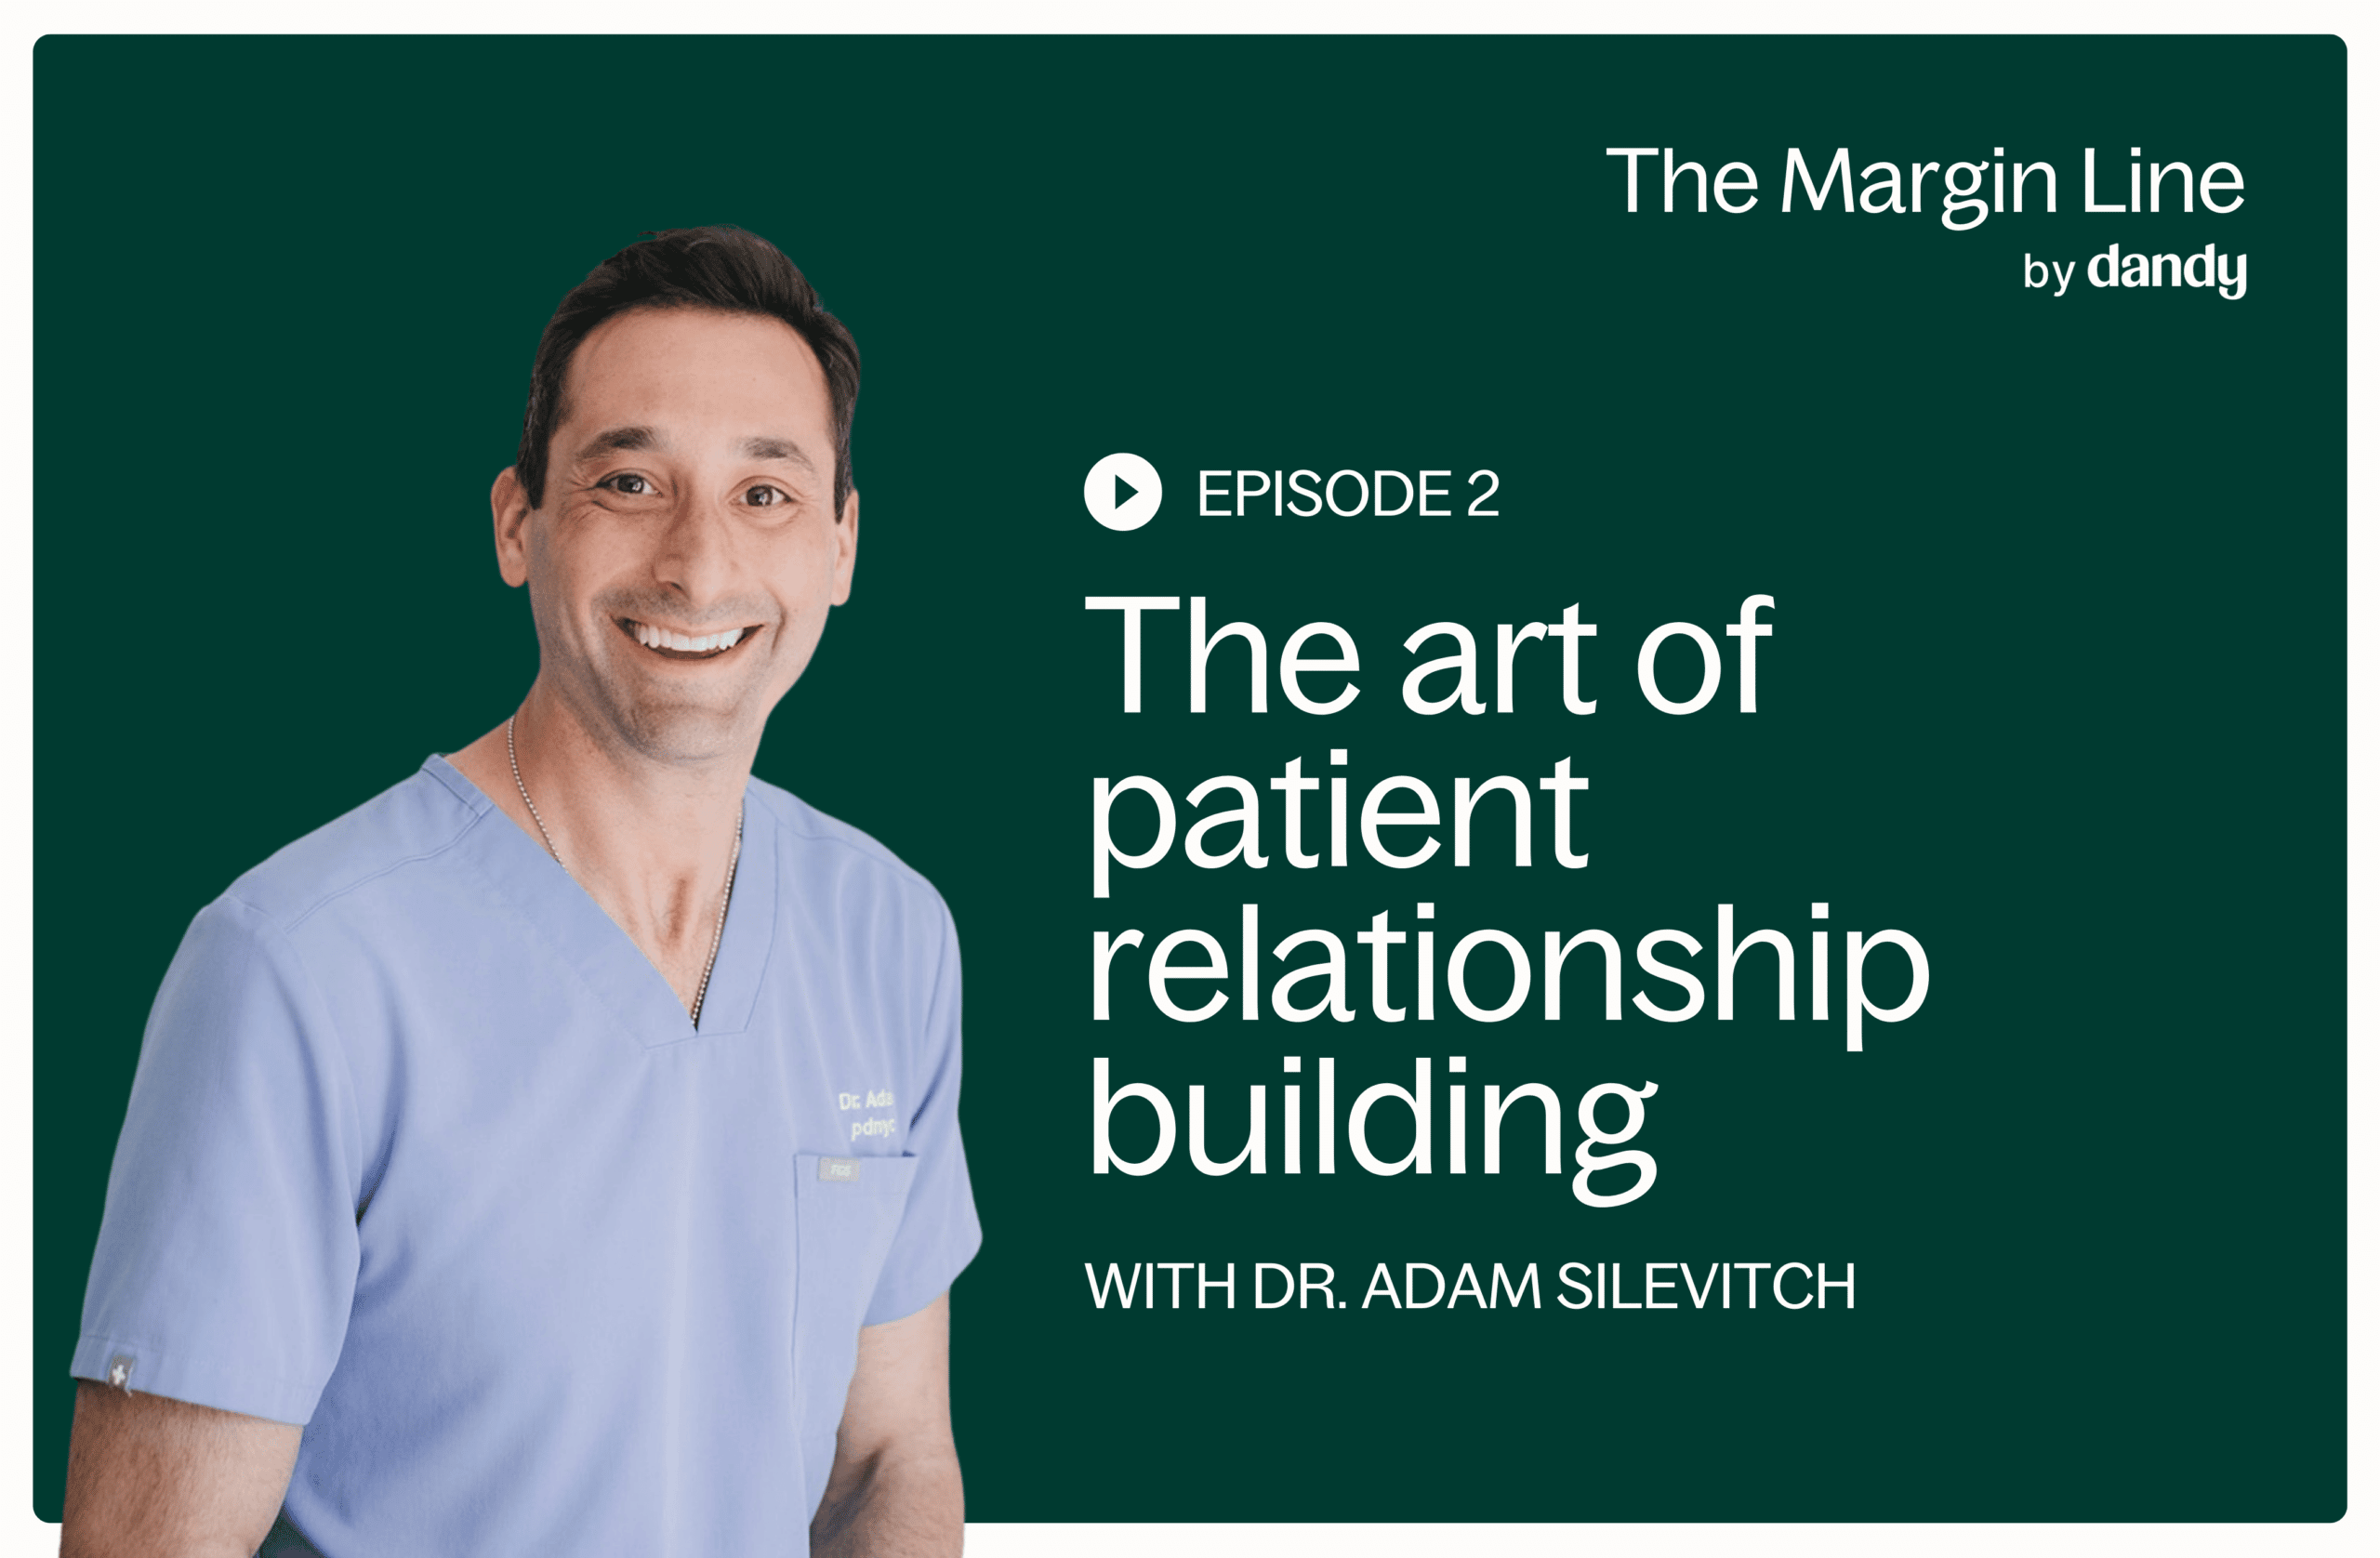 The art of patient relationship building